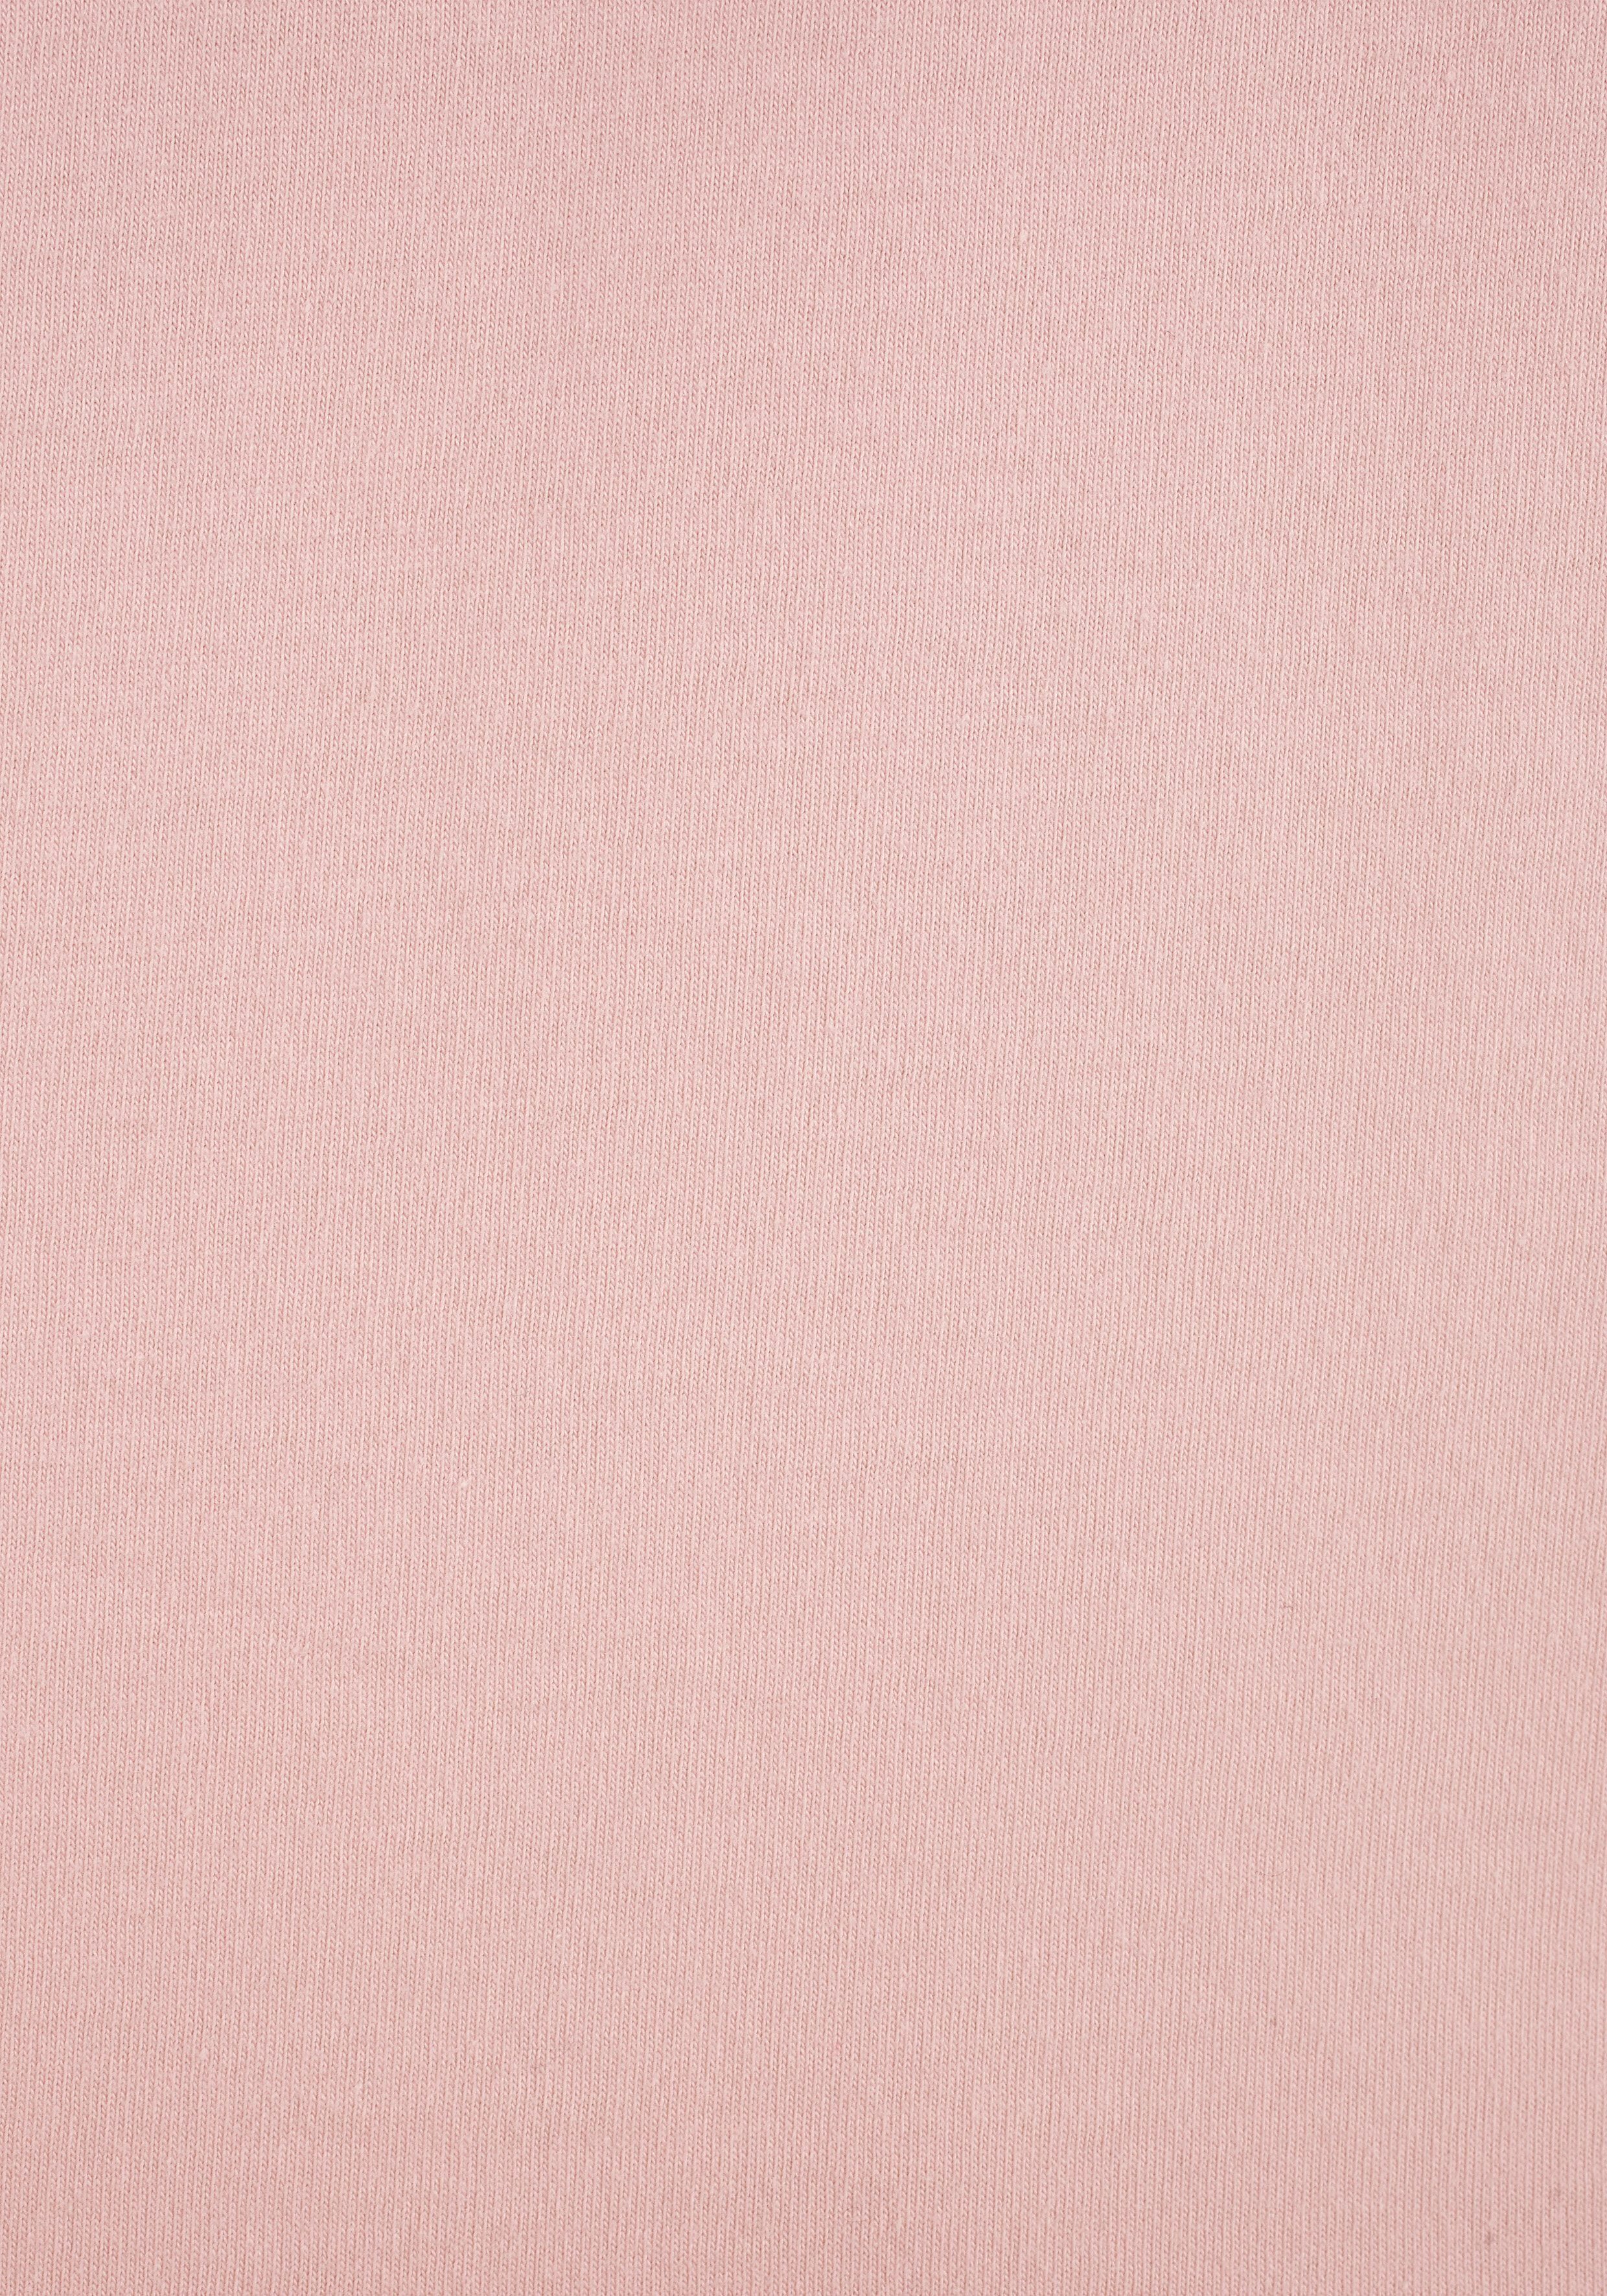 Buffalo Shorty (2 Shorts softem T-Shirt Basic Stück) rosa-gemustert gemusterter 1 tlg., und mit